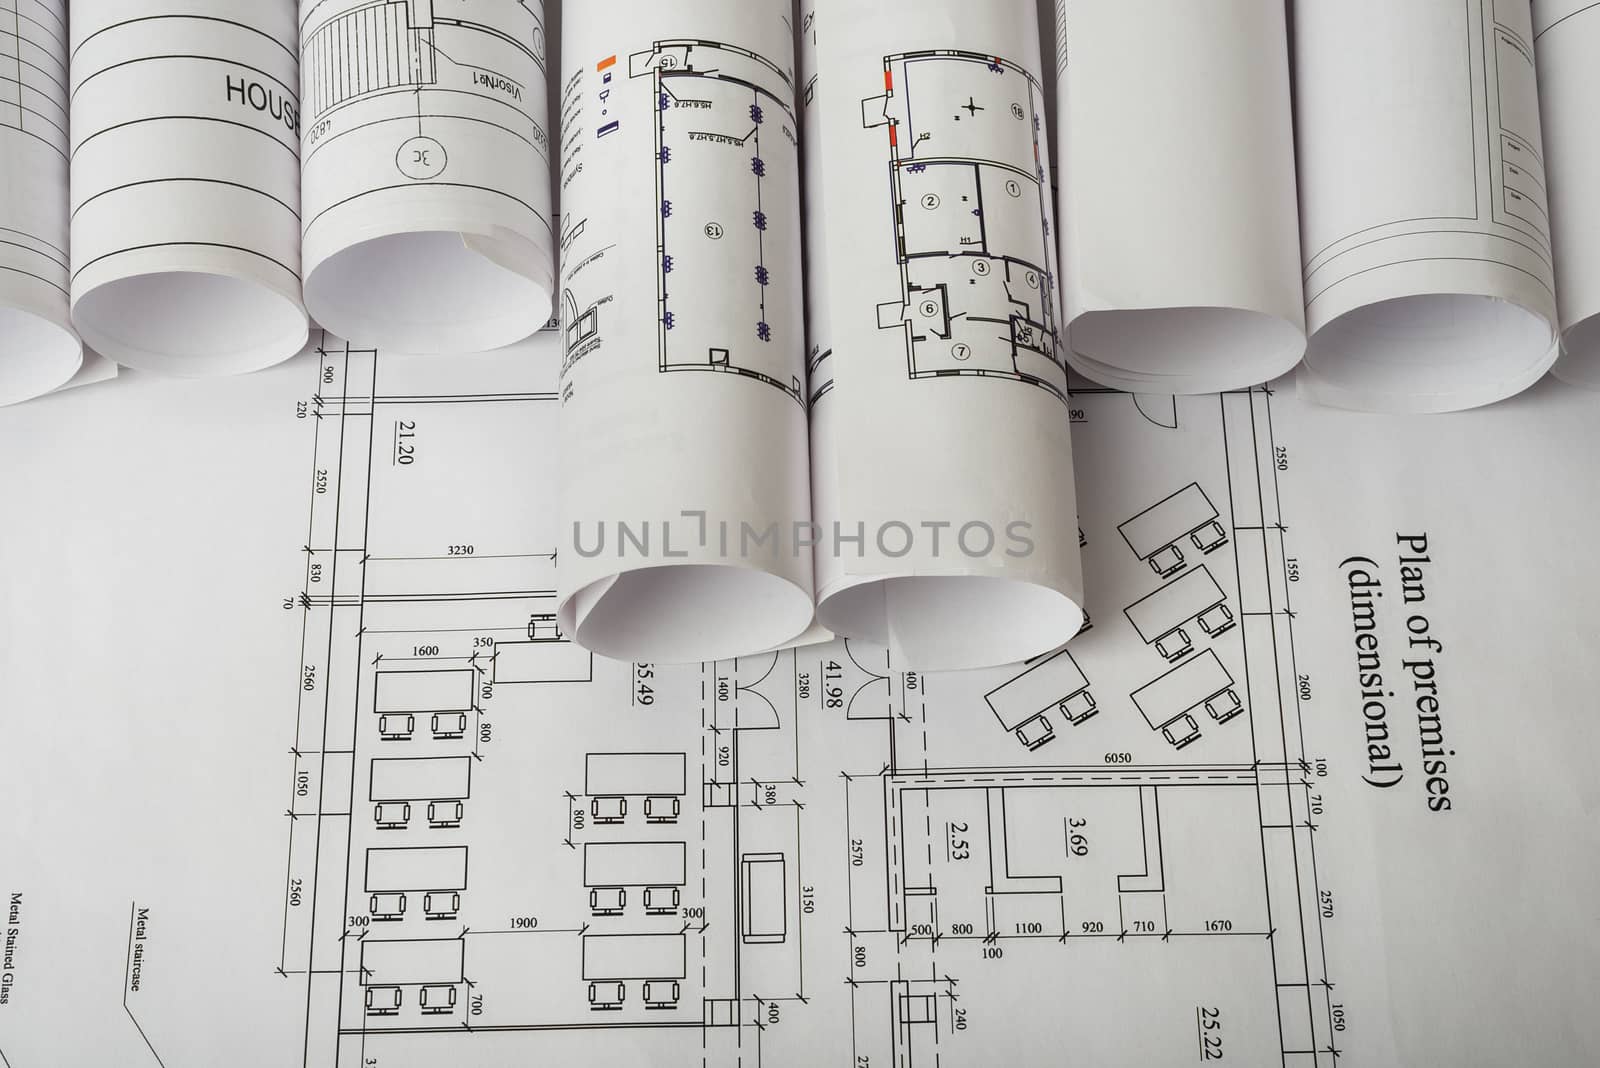 Rolls of blueprints, top view. Building concept